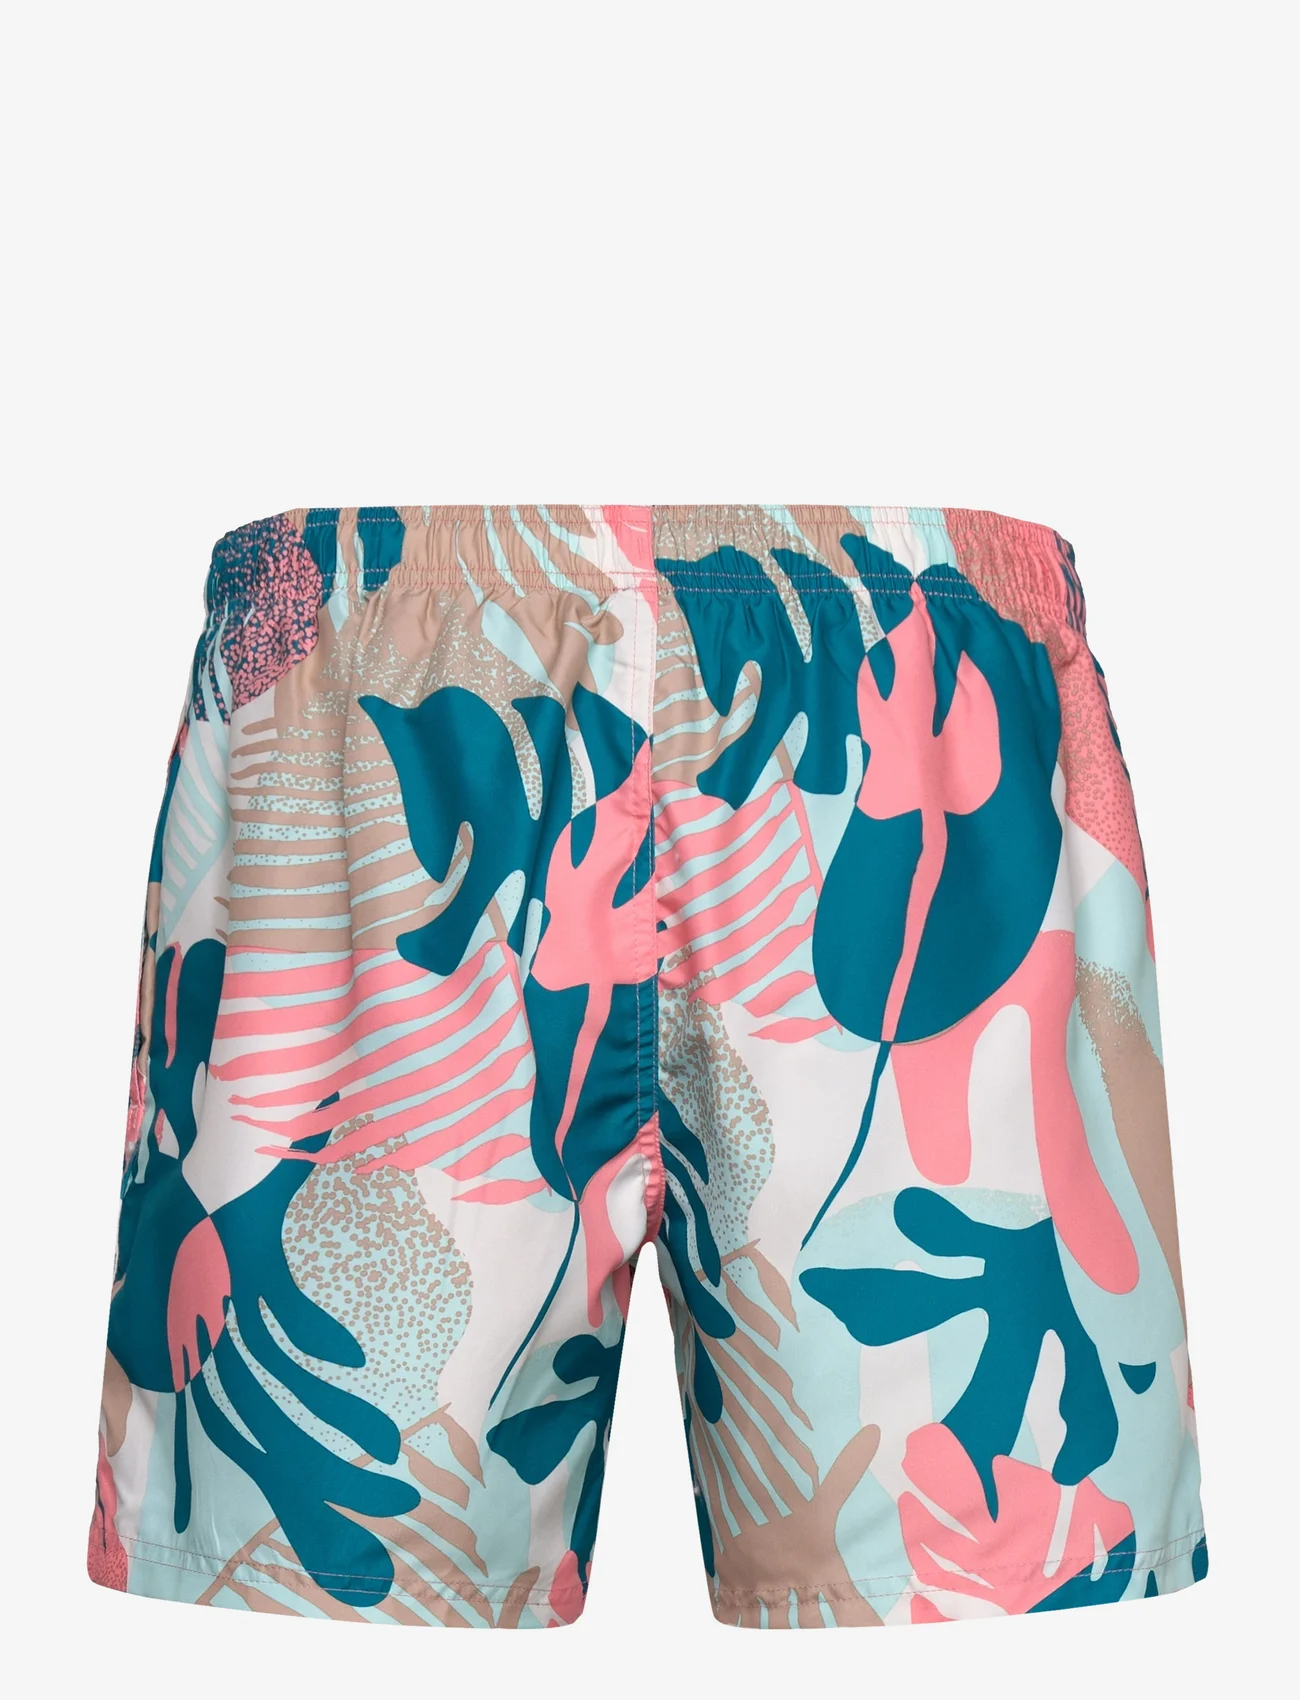 Speedo - Mens Printed Leisure 16" Watershort - swim shorts - blue/orange - 1